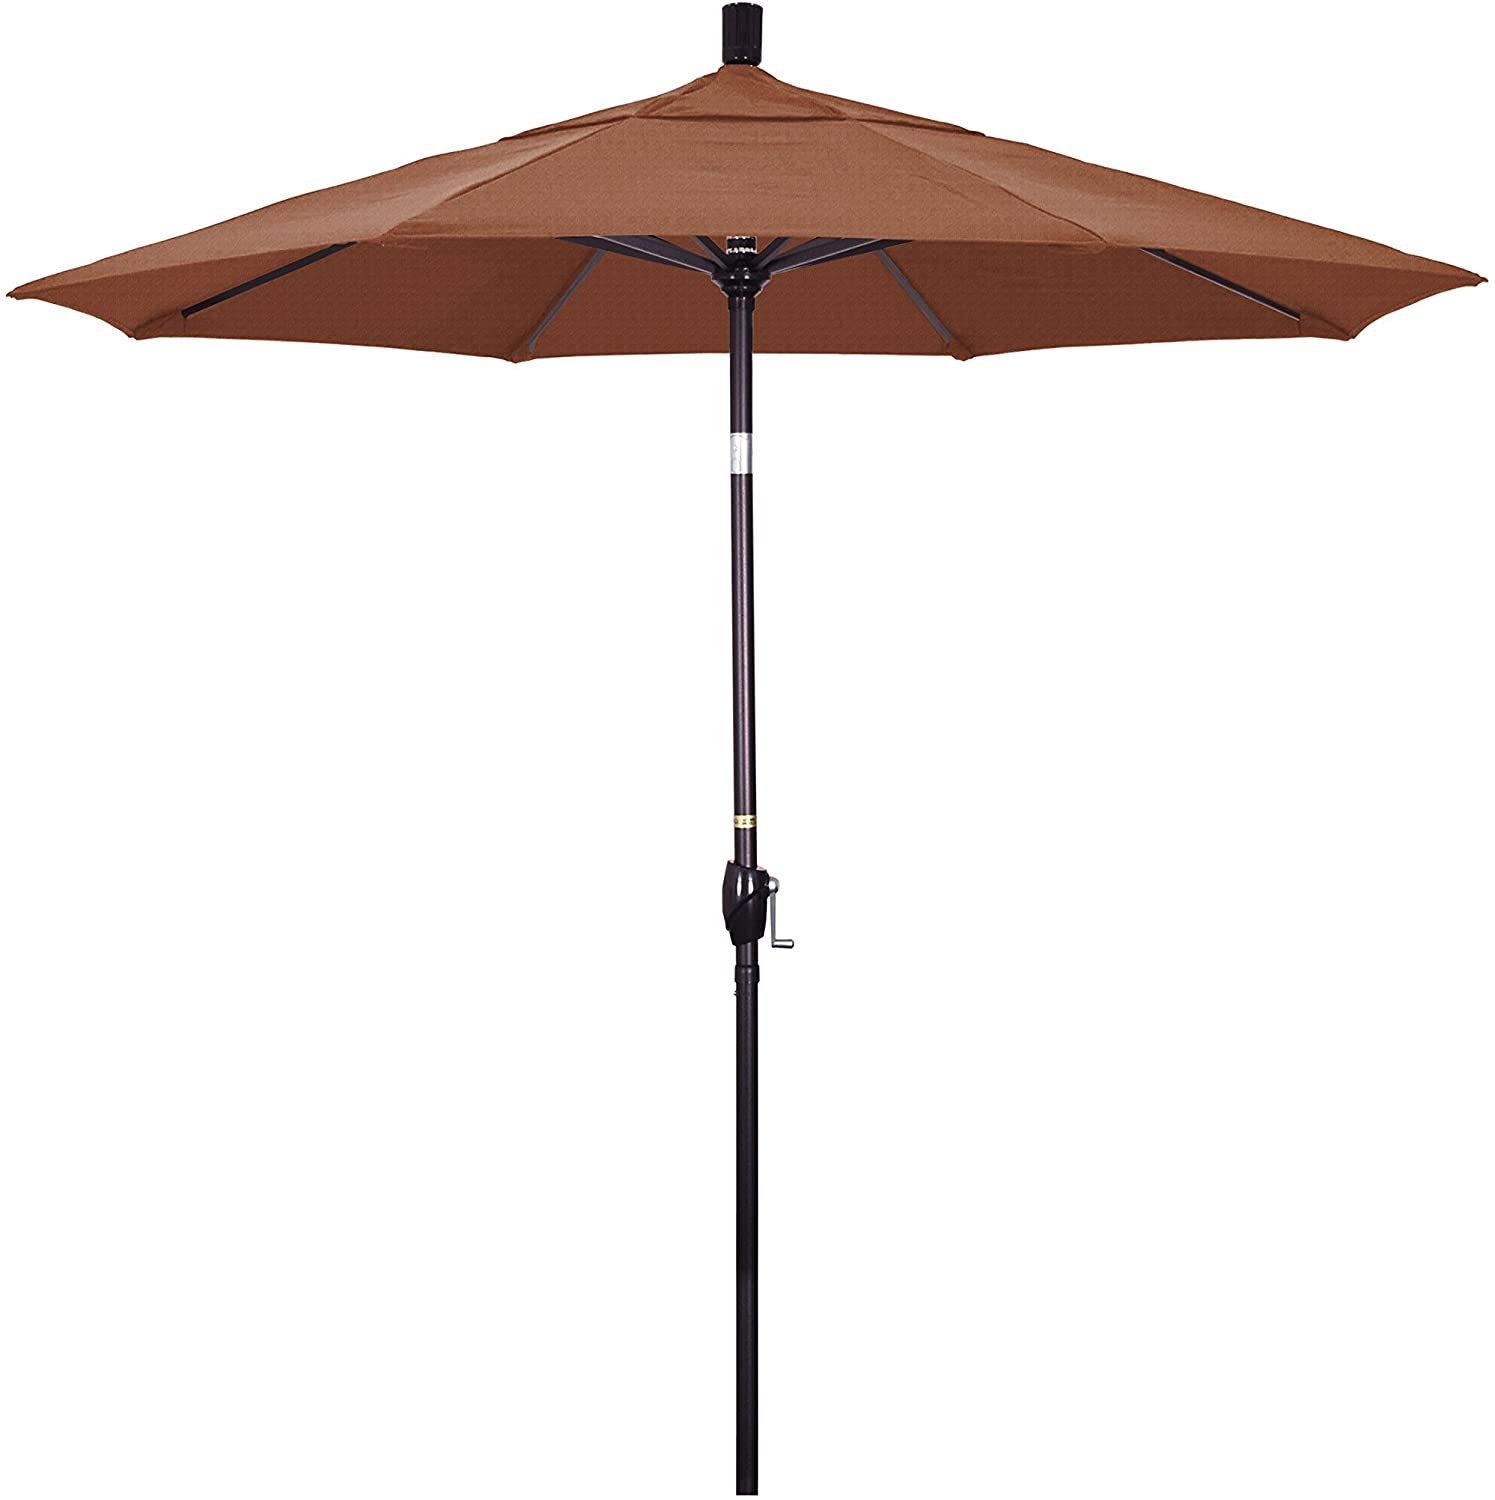 7.5 ft Market Umbrella Bronze/Antique Beige